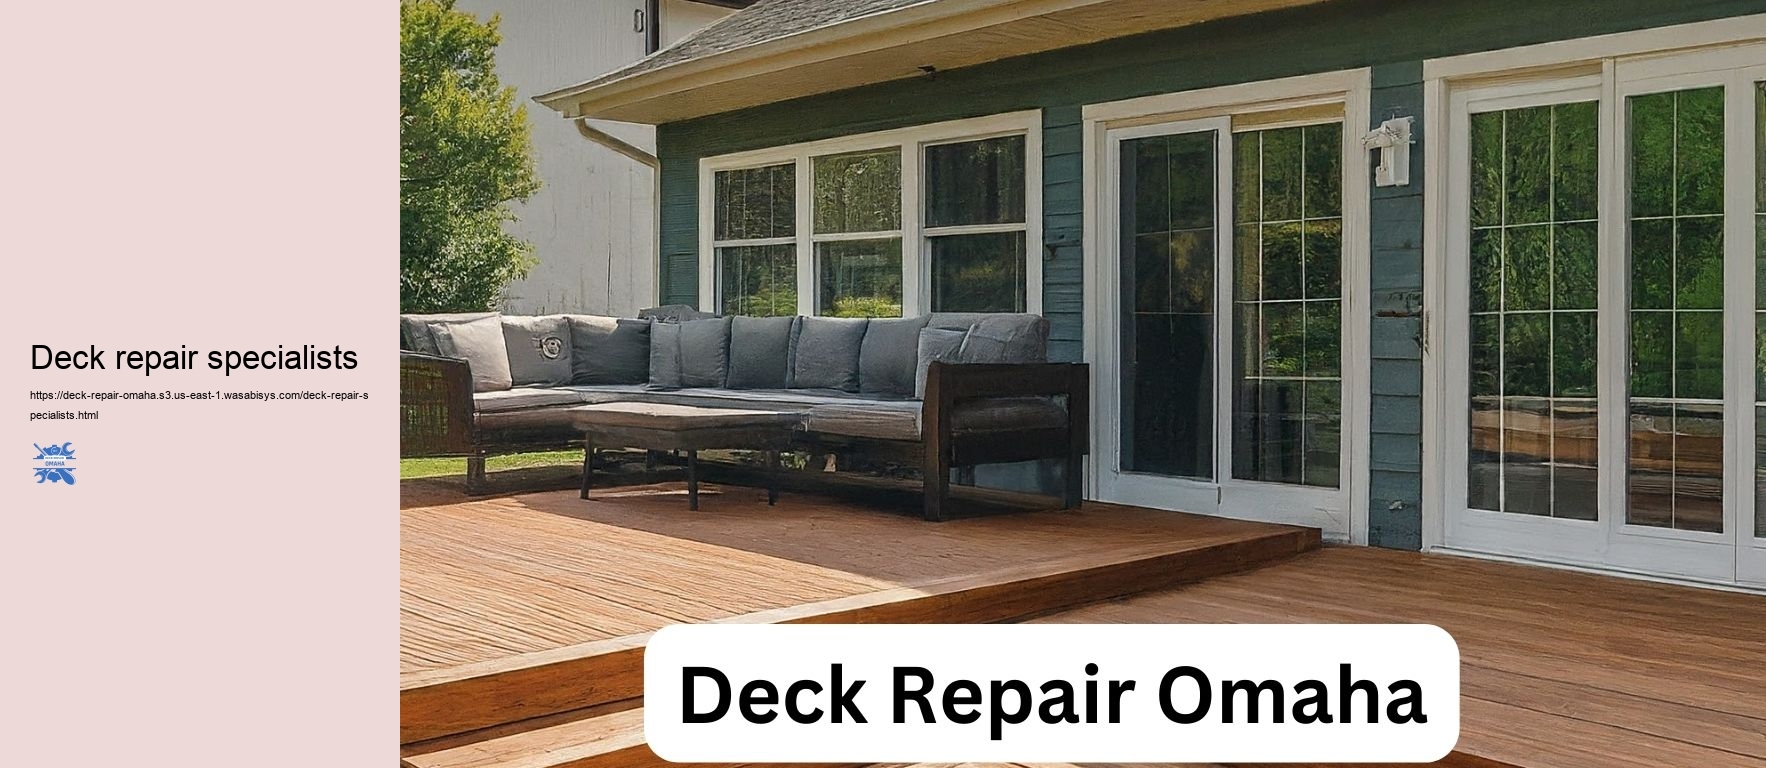 Deck repair specialists